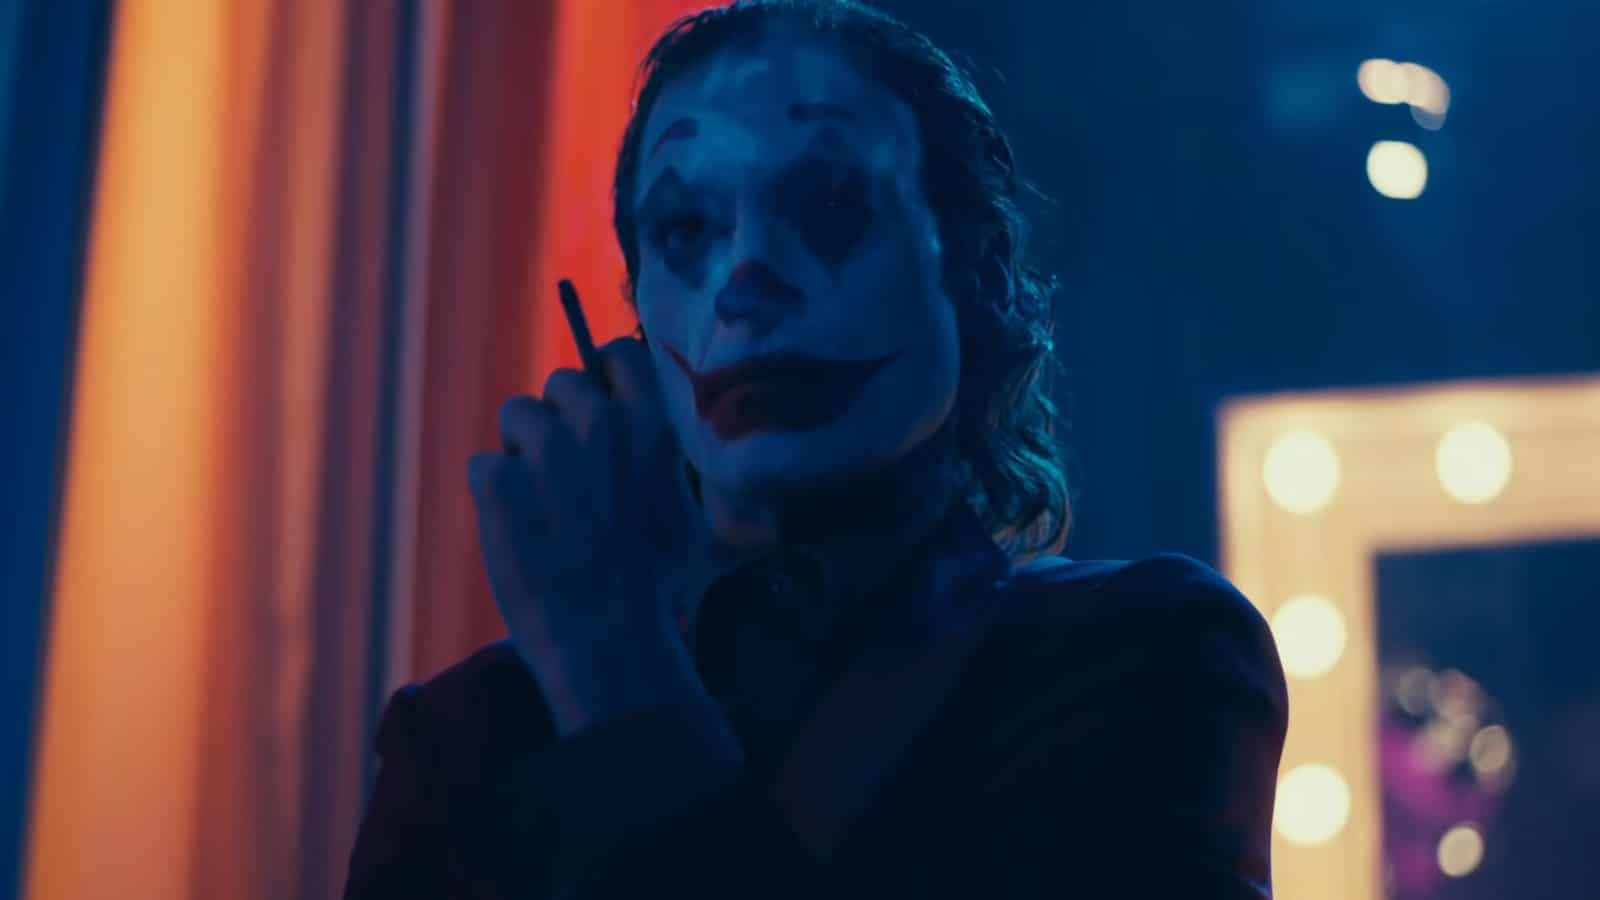 Joker 2 is set to see the return of Arthur Fleck